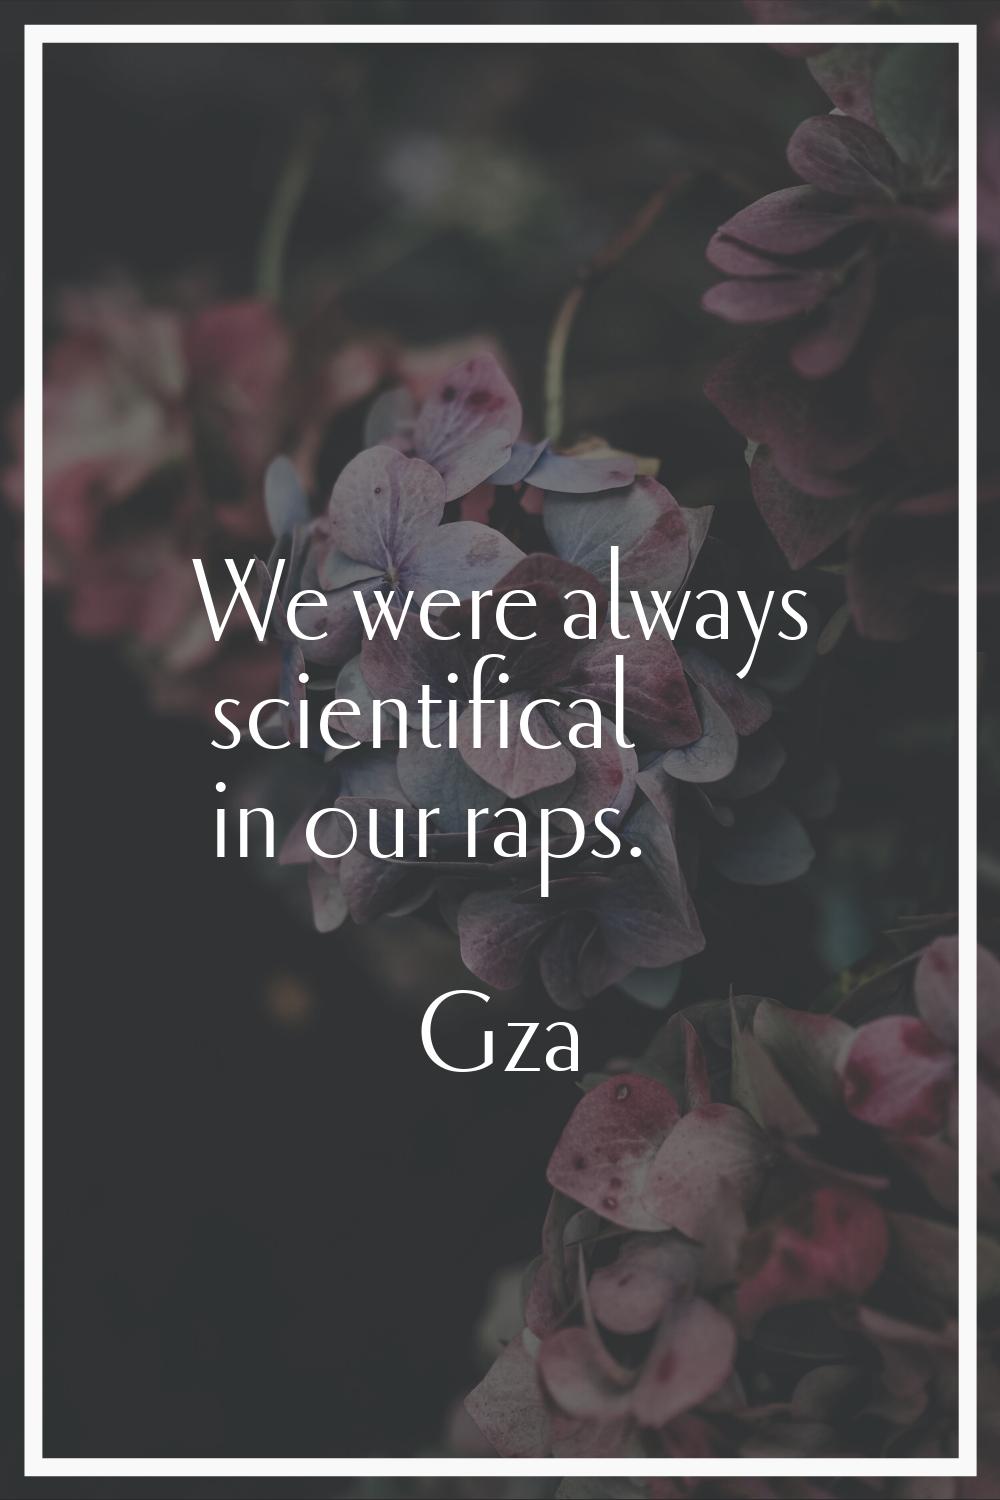 We were always scientifical in our raps.